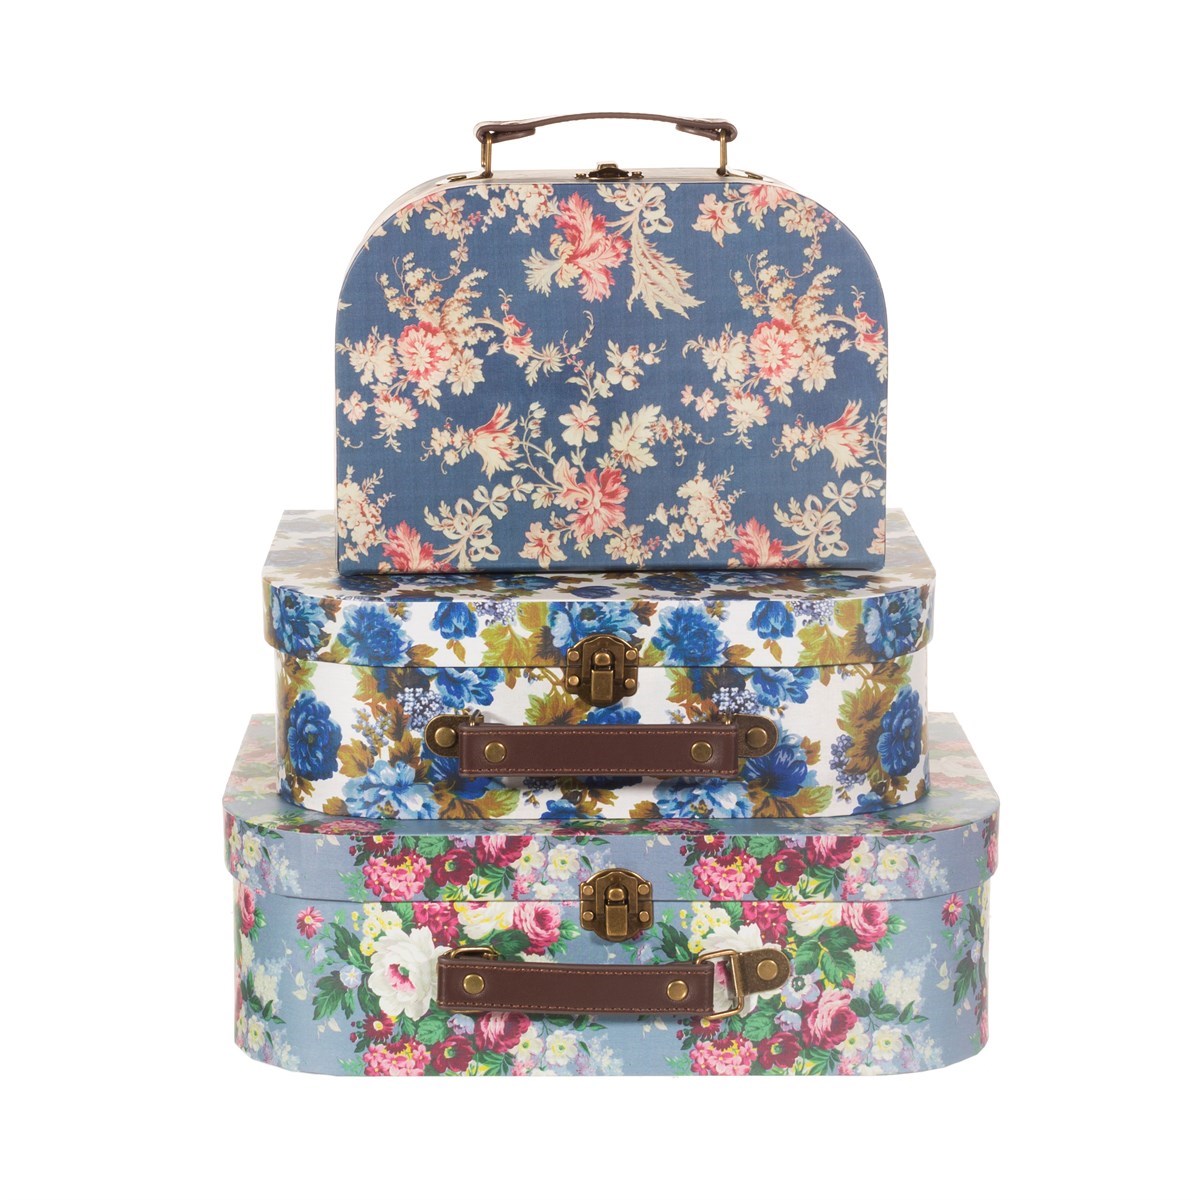 Keepsake Trunks Suitcase set of 3 - Blue Delphine Vintage Rose, Keepsake Box